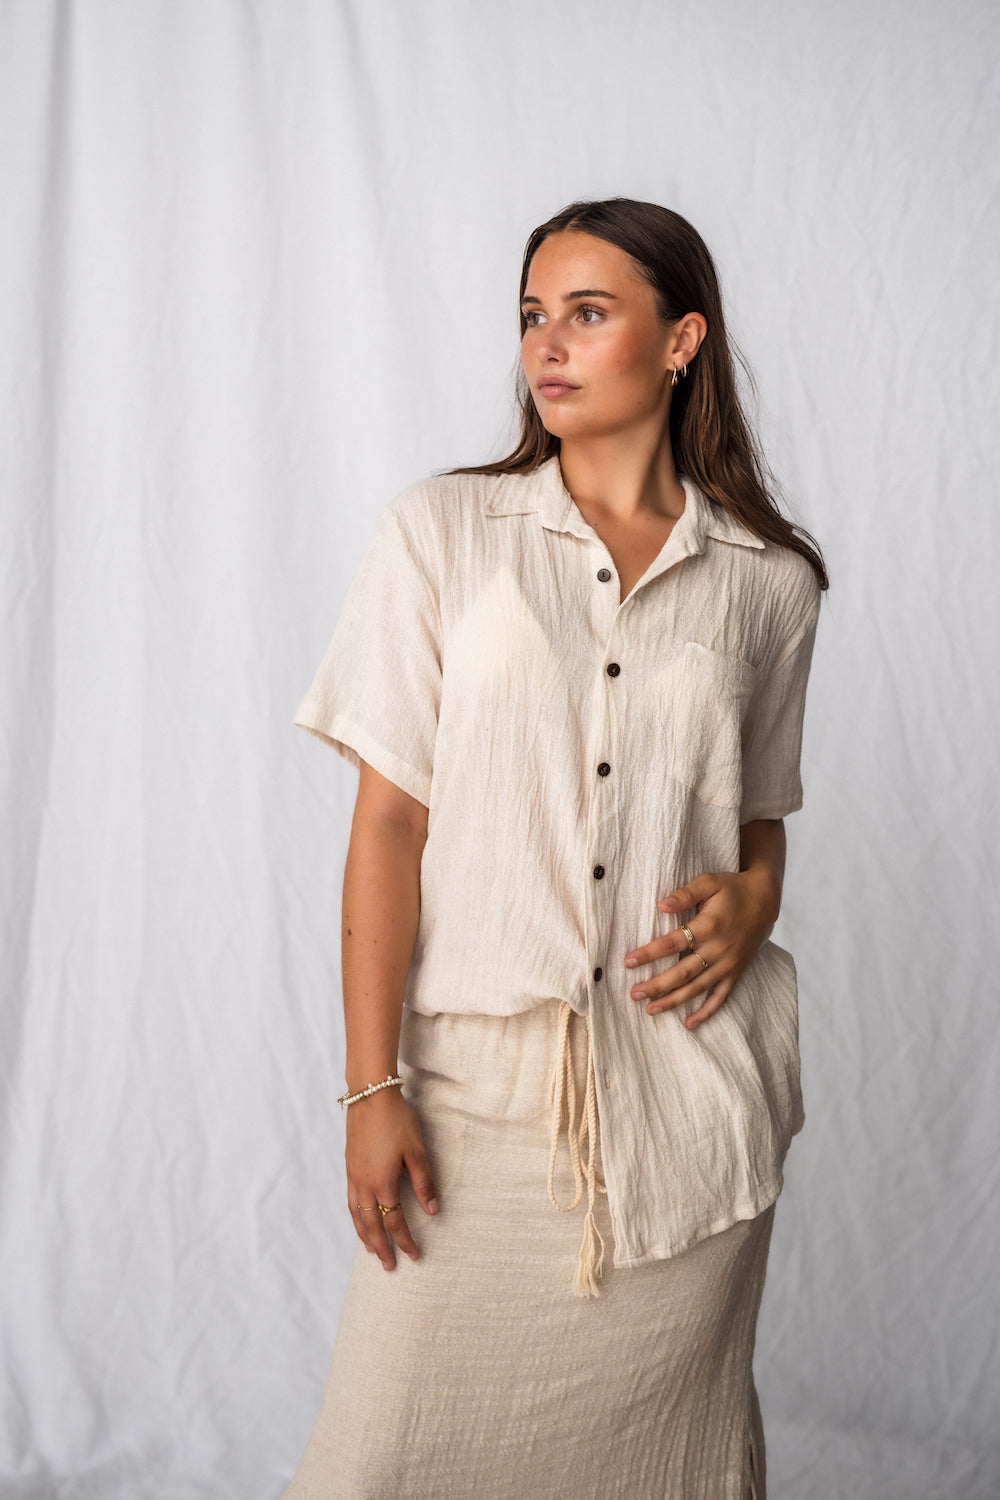 Cove Shirt Natural - Natural colour button down shirt made from Ramie hemp fibre. Malia The Label - Slow Fashion